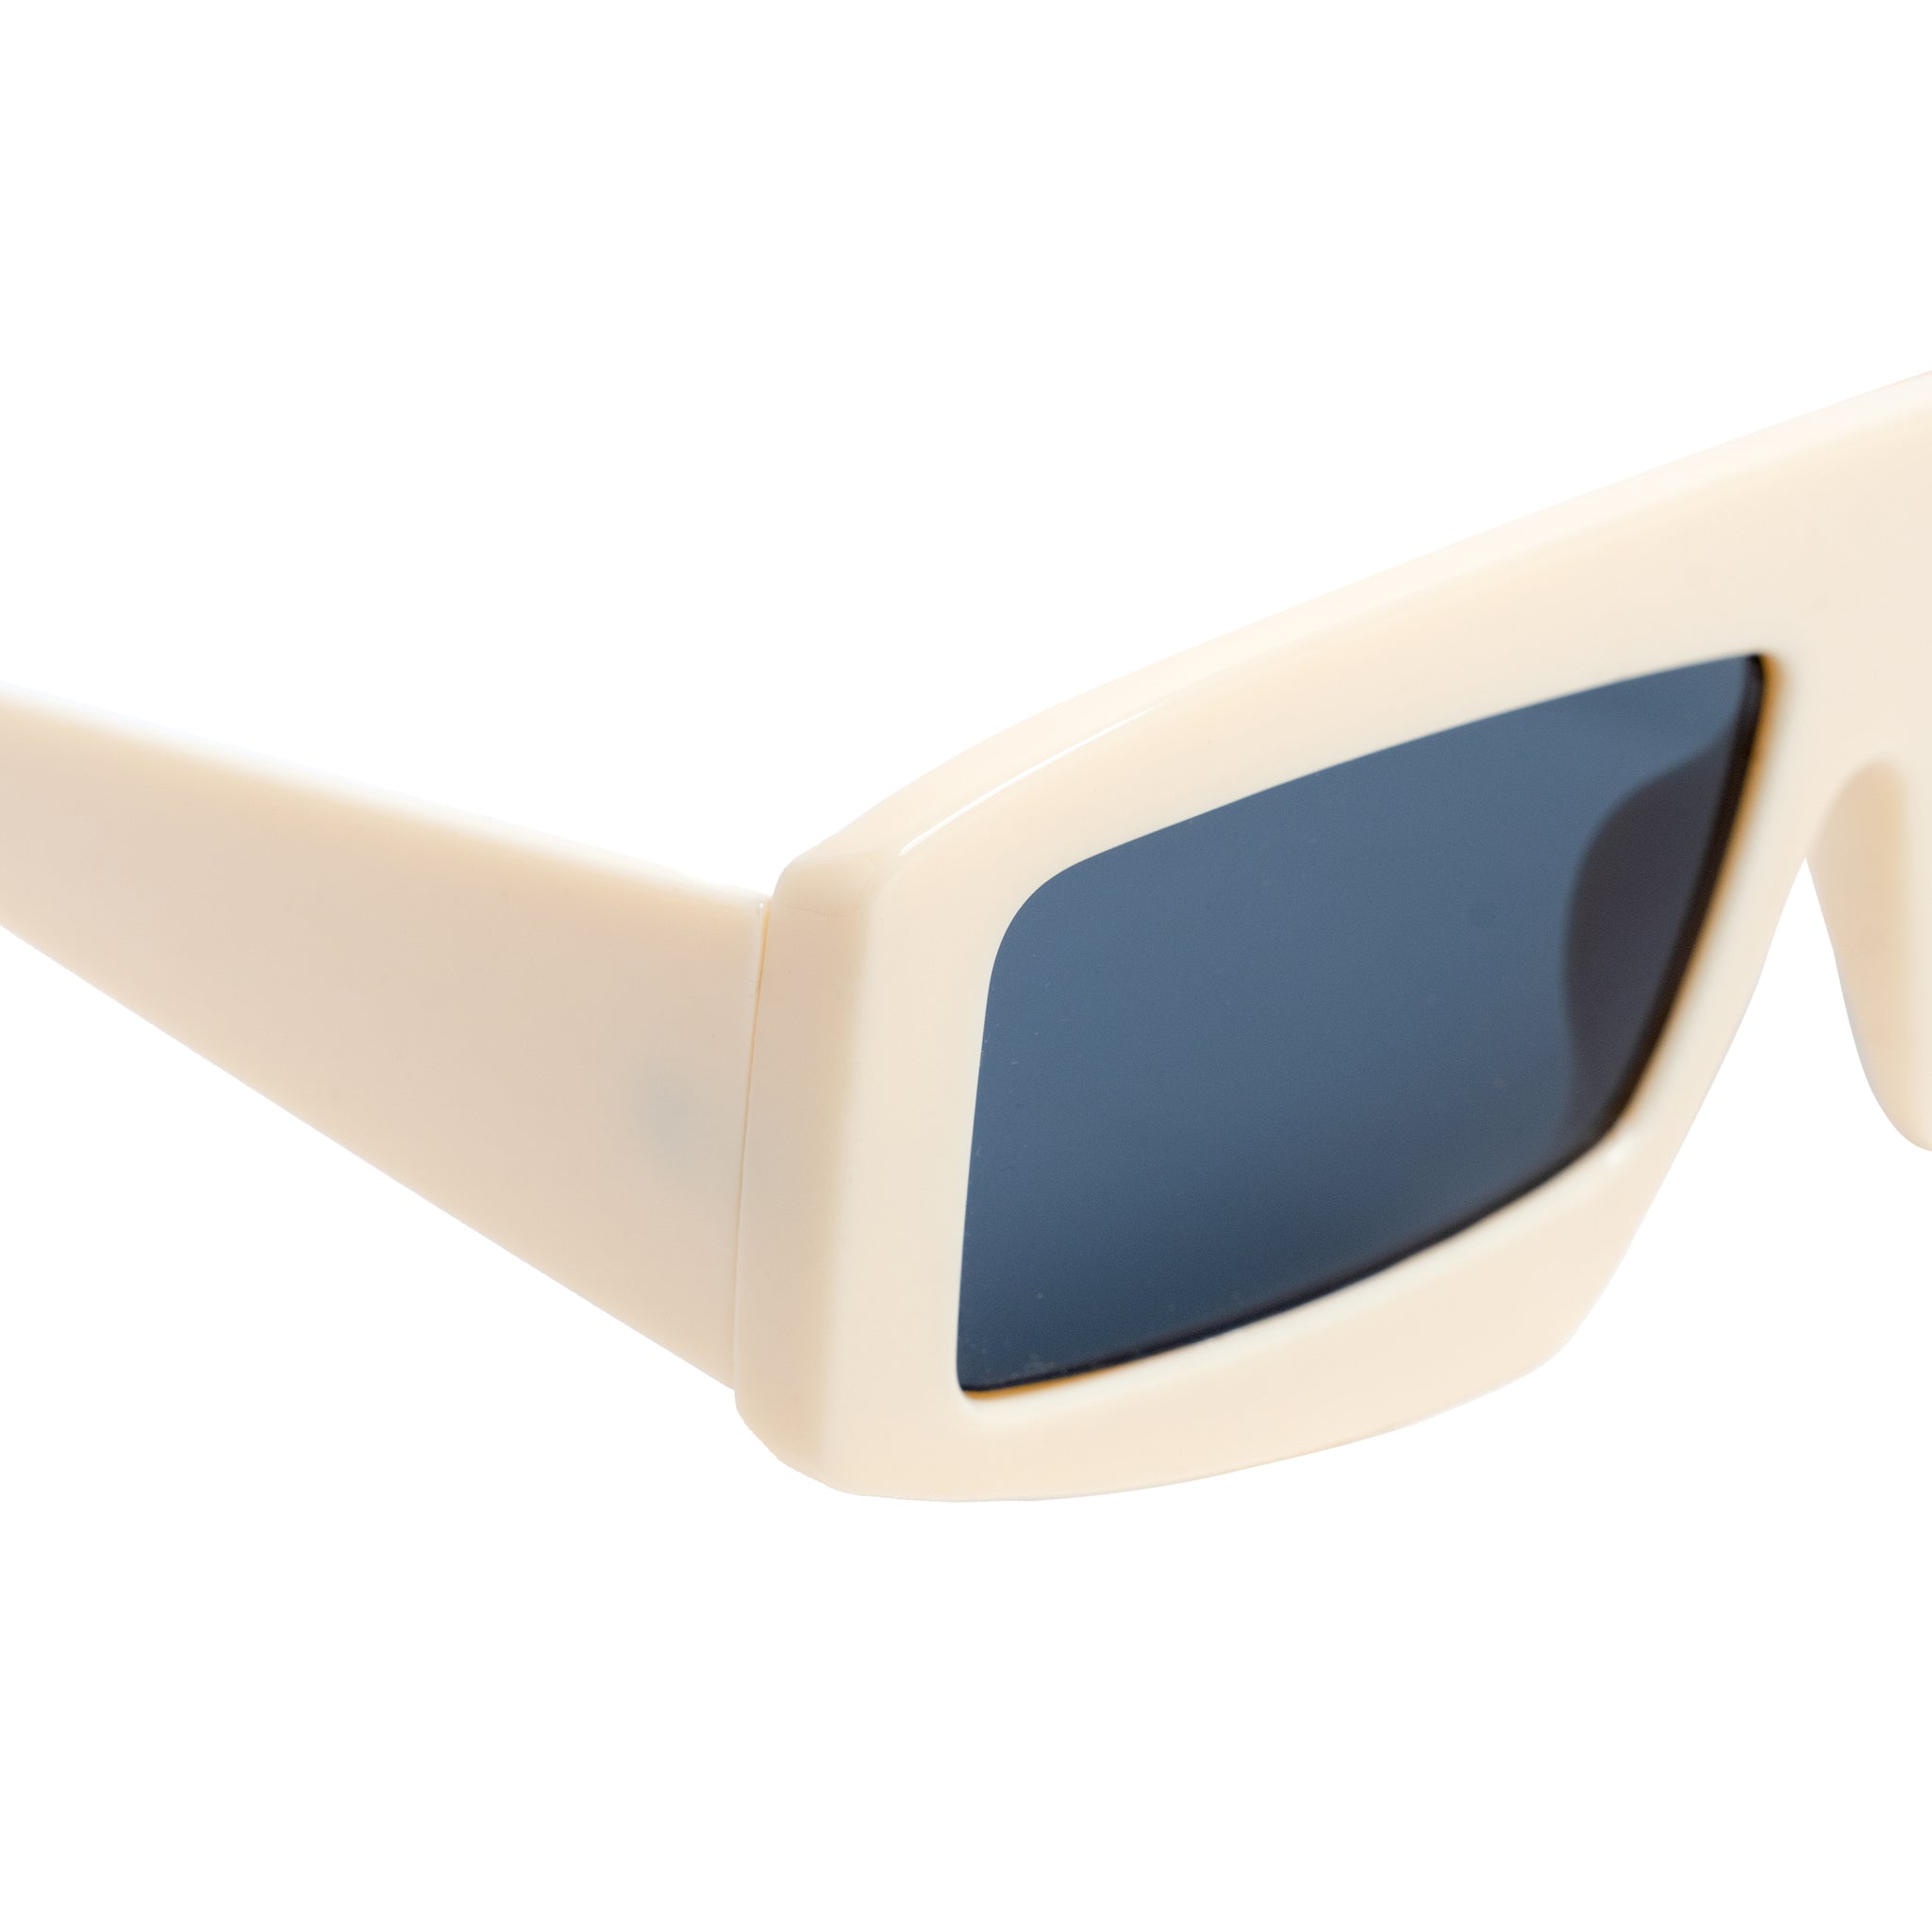 Chokore Designer Sunglasses with UV 400 Protection (Beige)